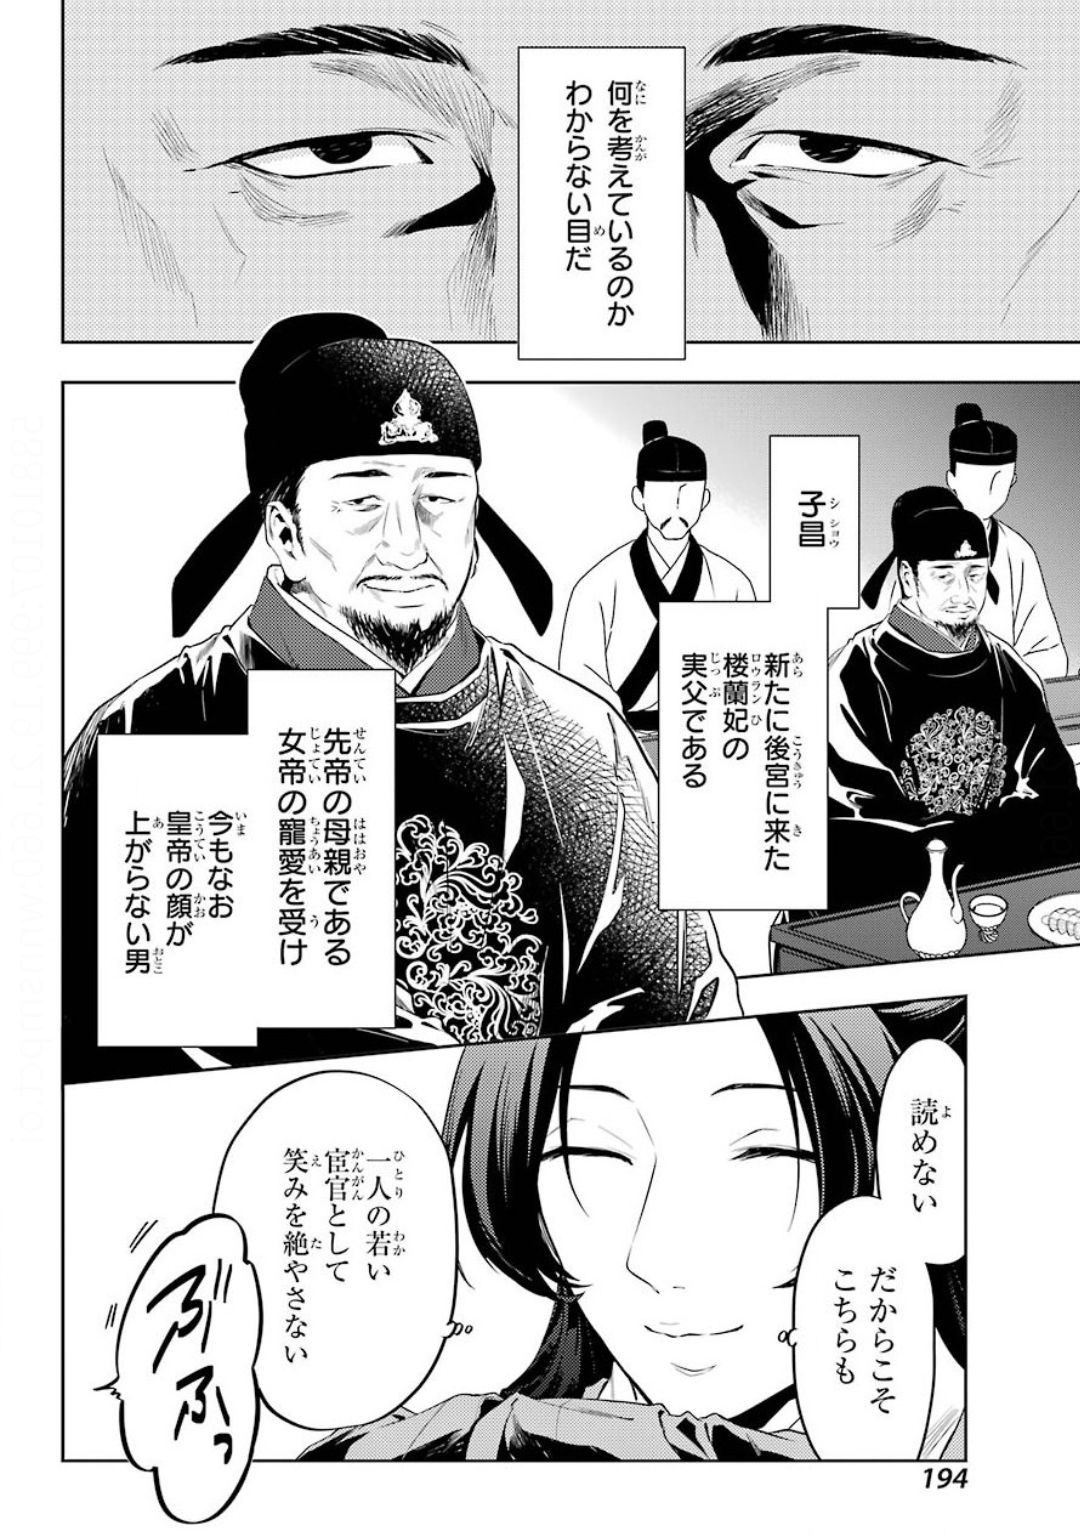 Kusuriya no Hitorigoto - Chapter 36-2 - Page 3